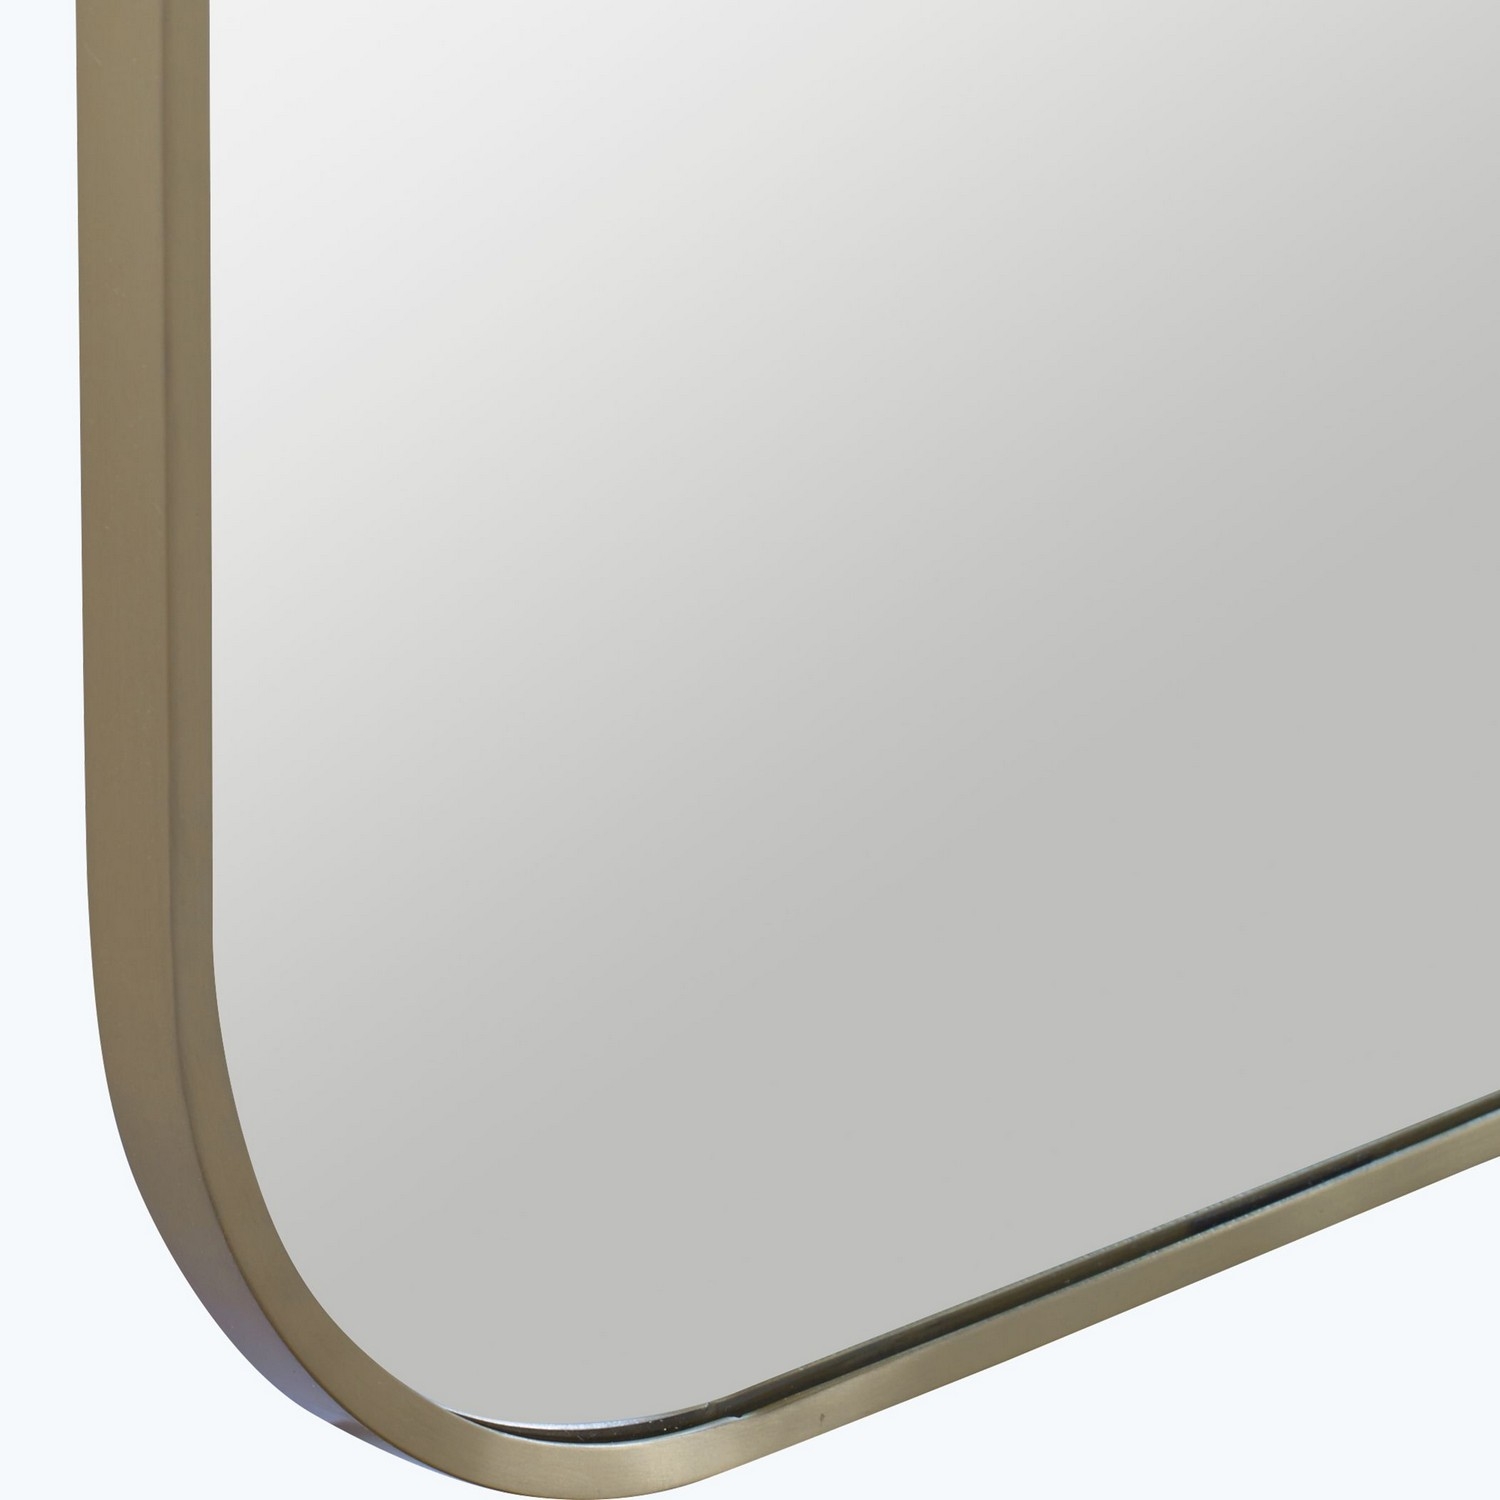 Uttermost Taft Plated Mirror - Brass